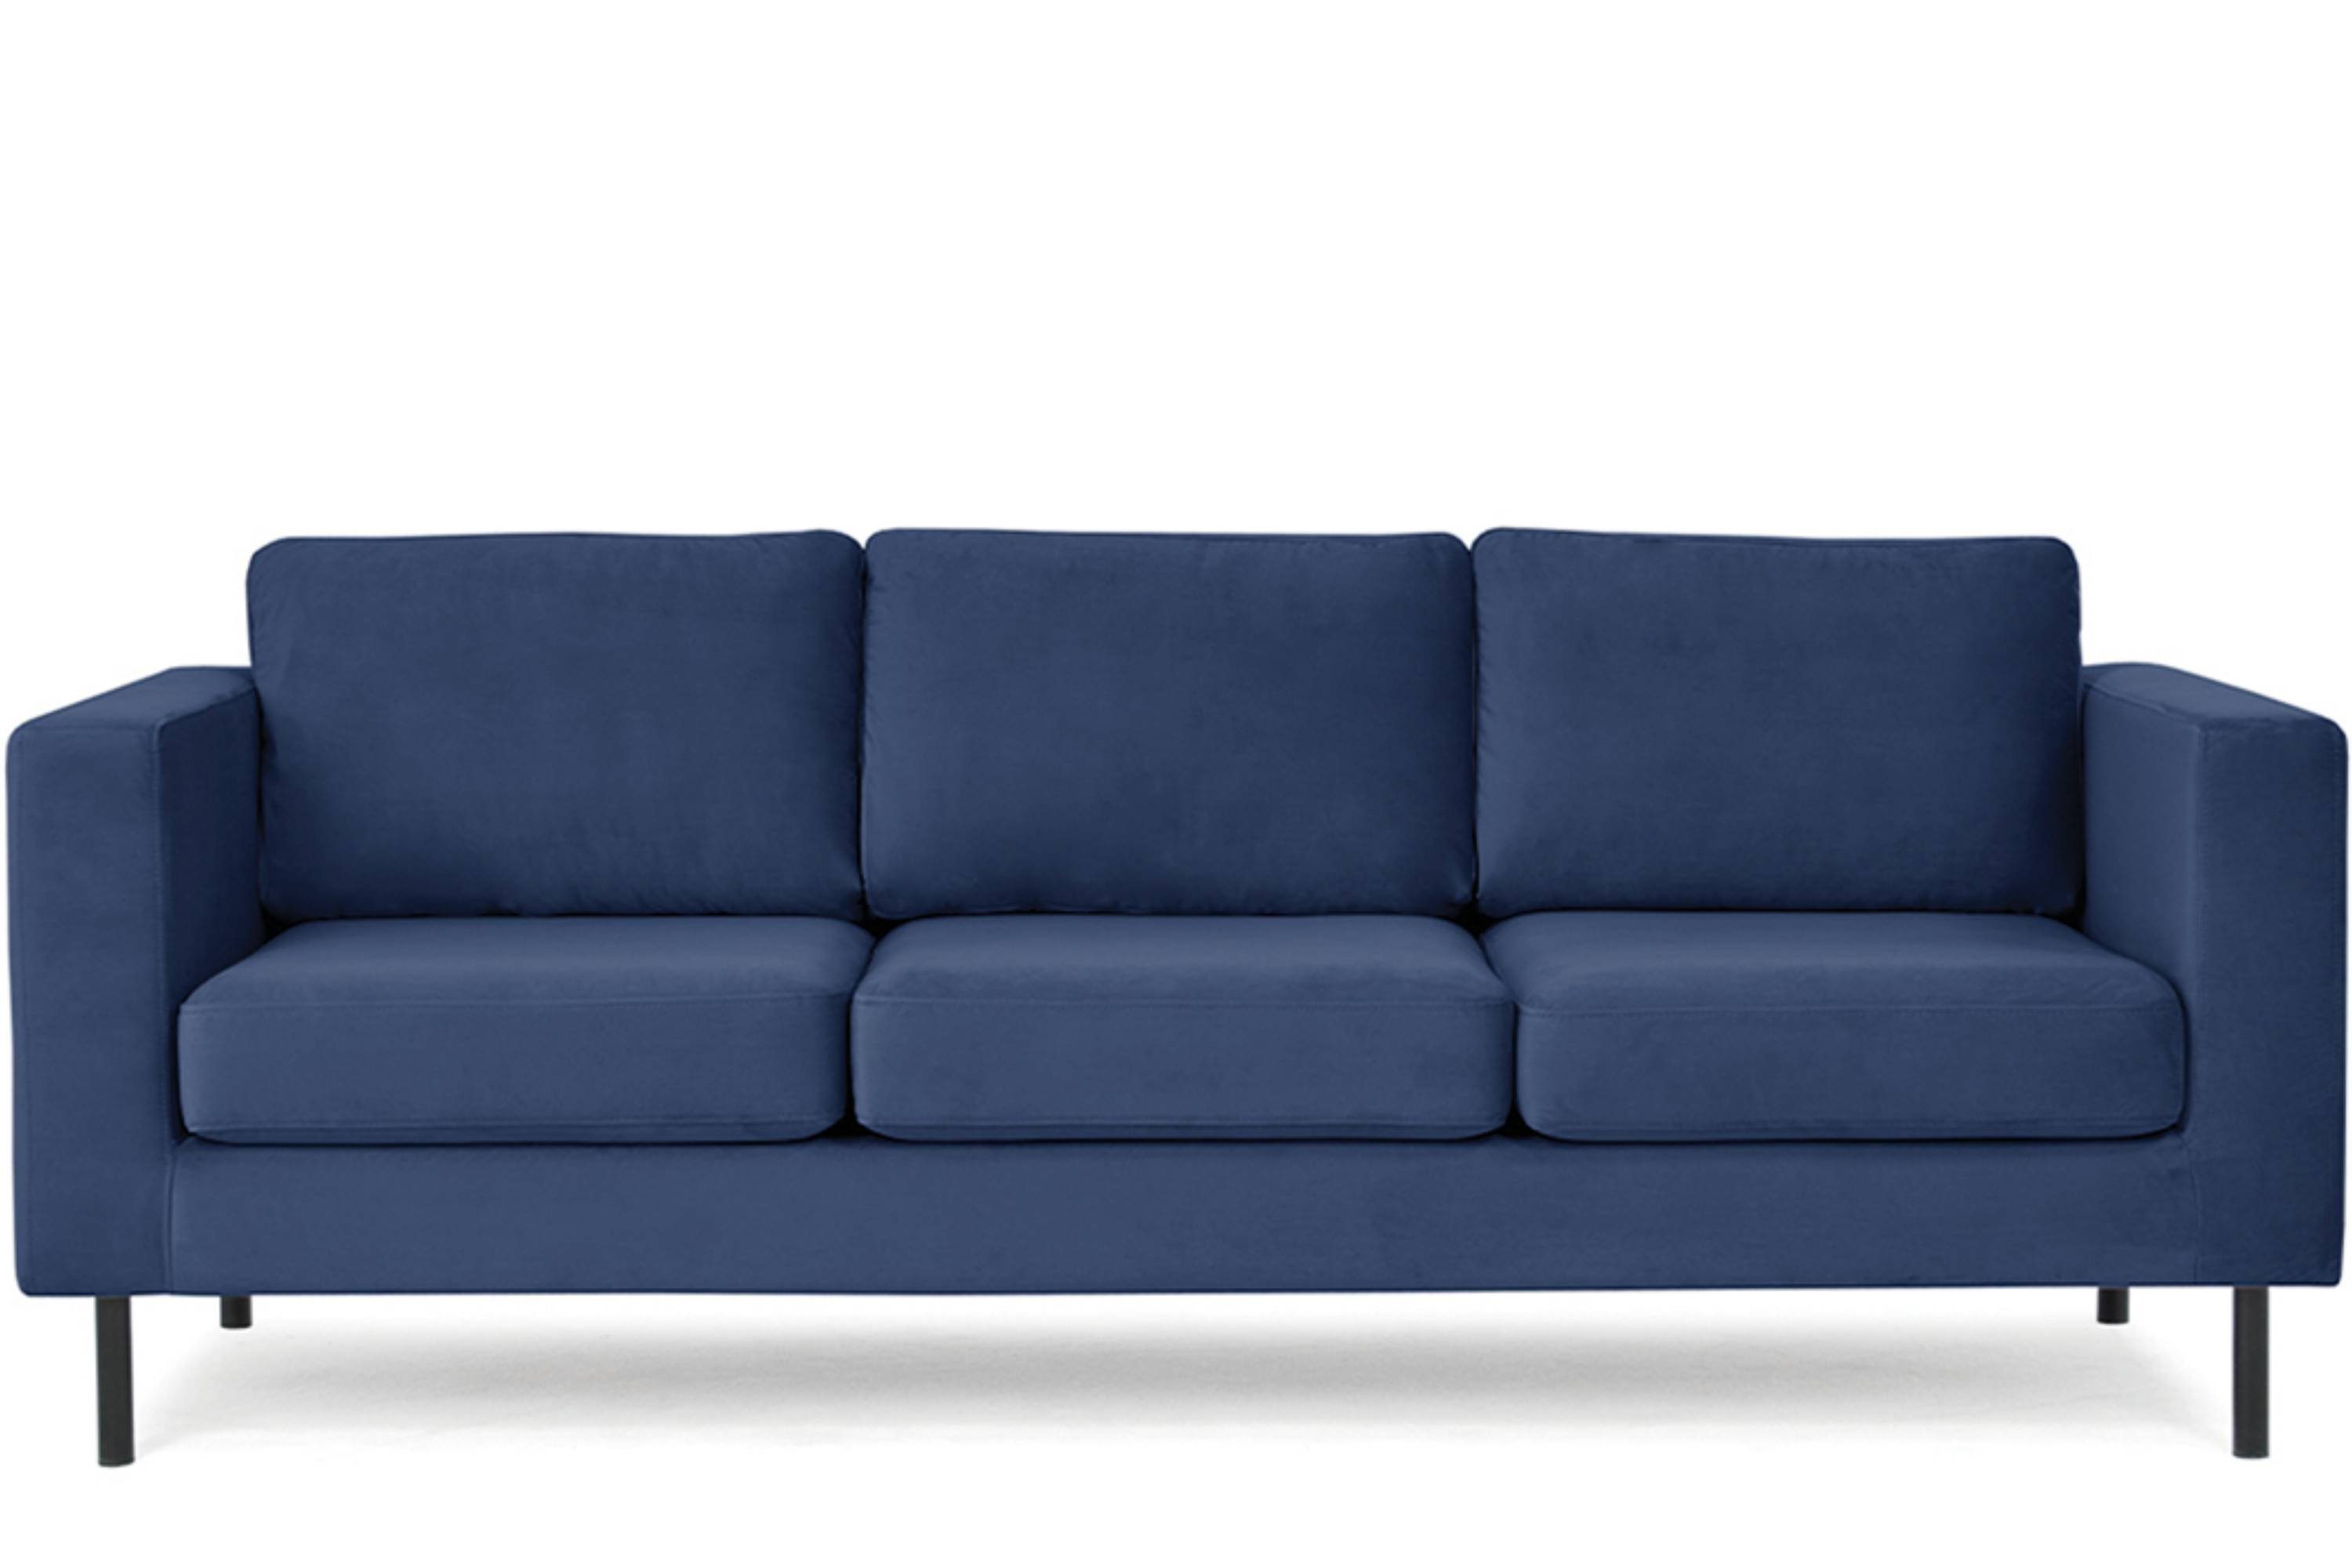 | 3 TOZZI hohe Konsimo | universelles Personen, Sofa marineblau 3-Sitzer Beine, Design marineblau marineblau